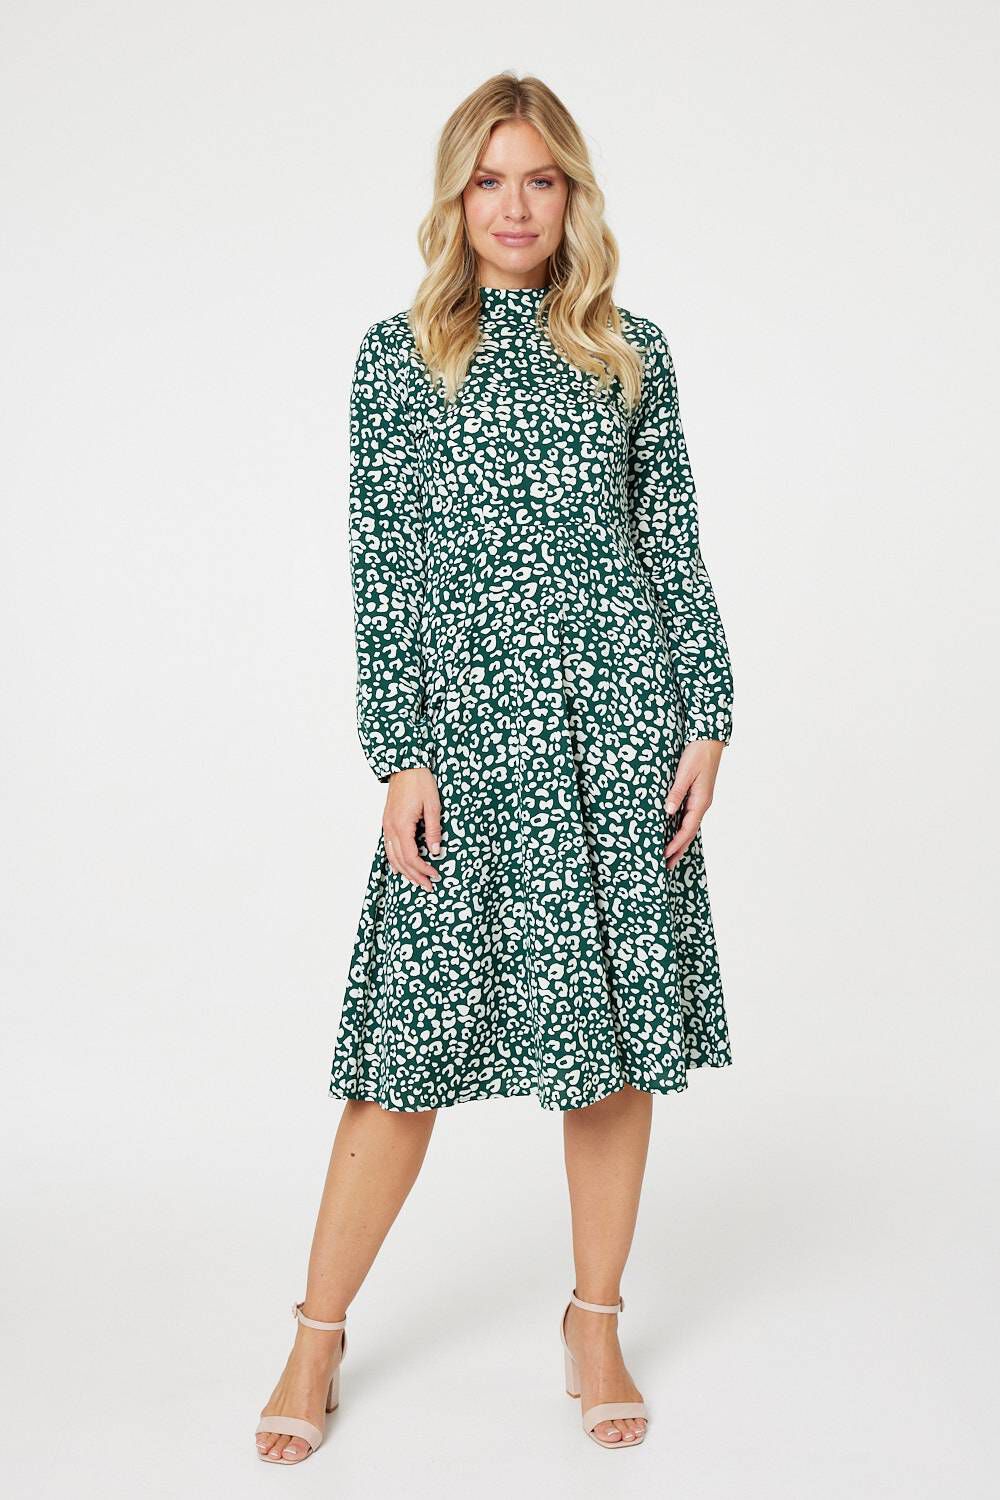 Izabel London Green - Leopard Print High Neck Tea Dress, Size: 12